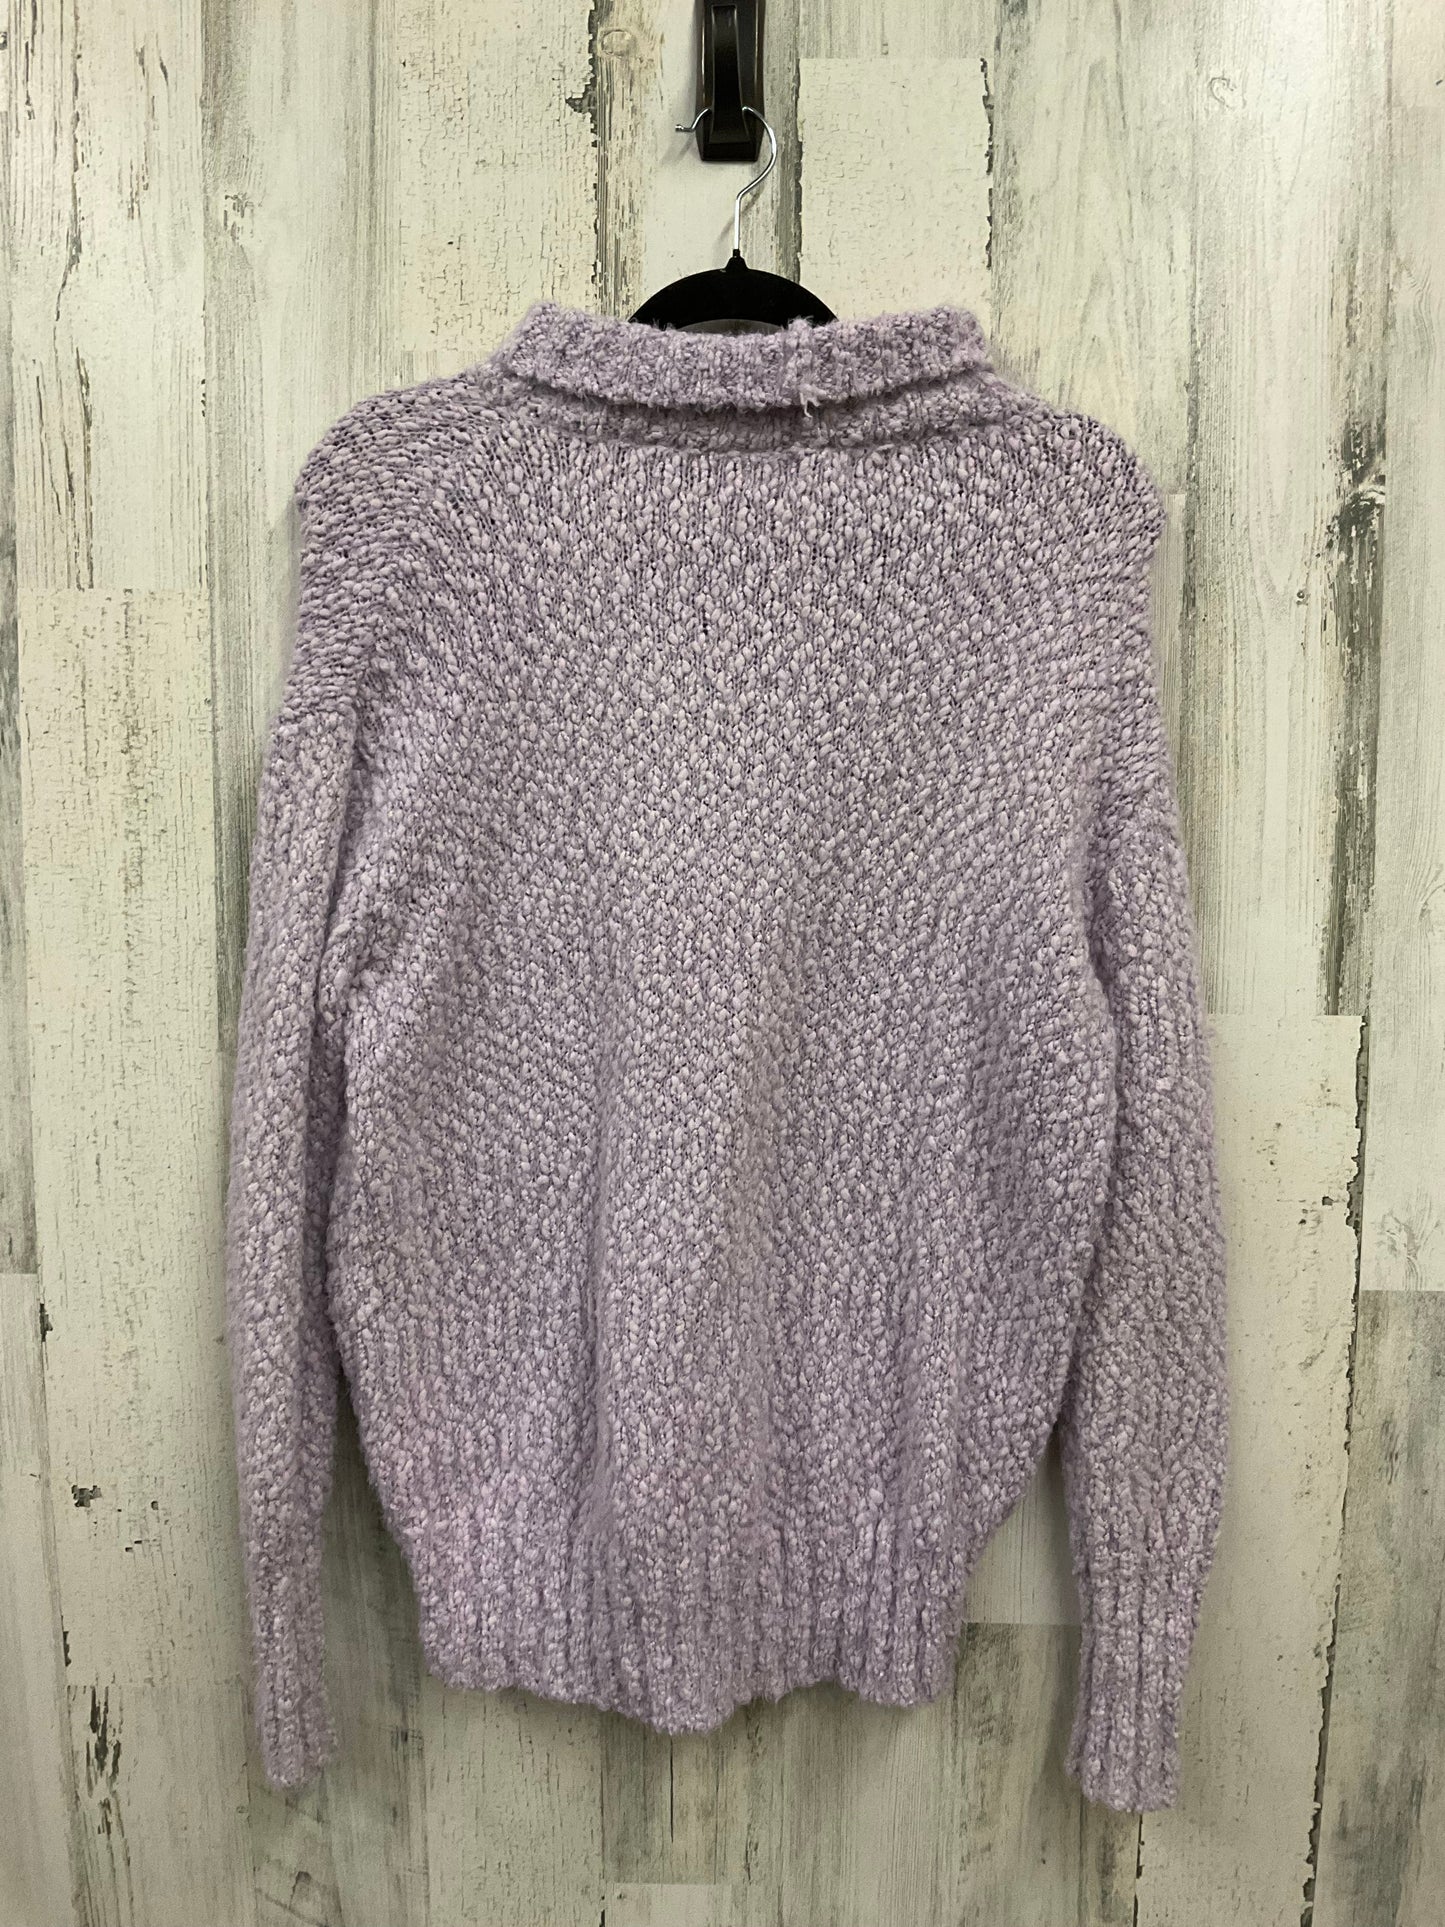 Sweater By Cynthia Rowley  Size: Xs